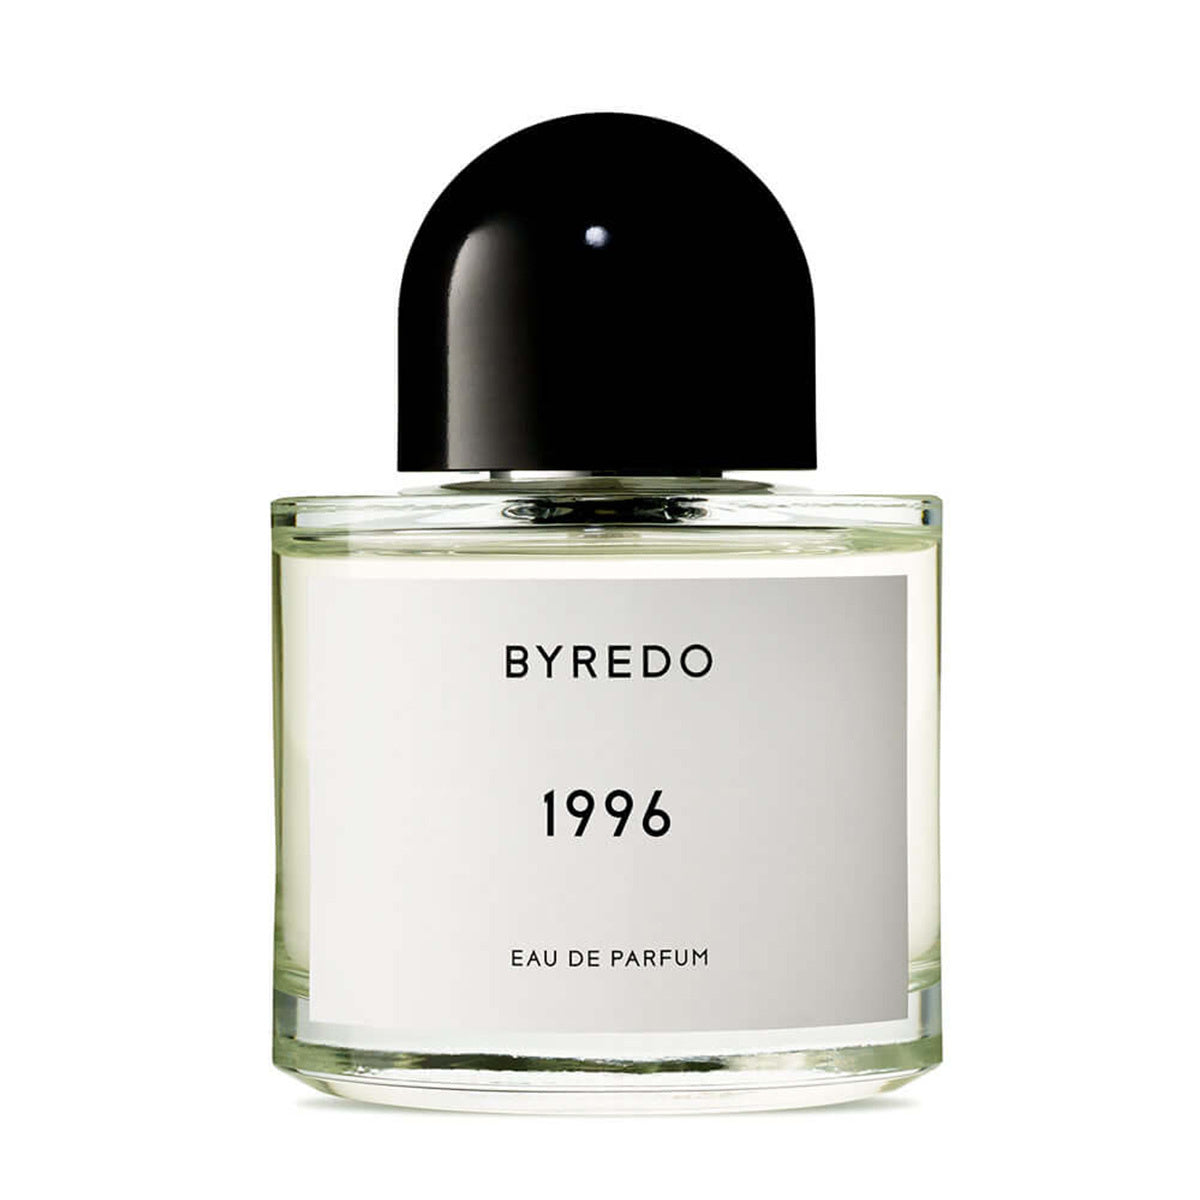 Primary image of 1996 Eau de Parfum